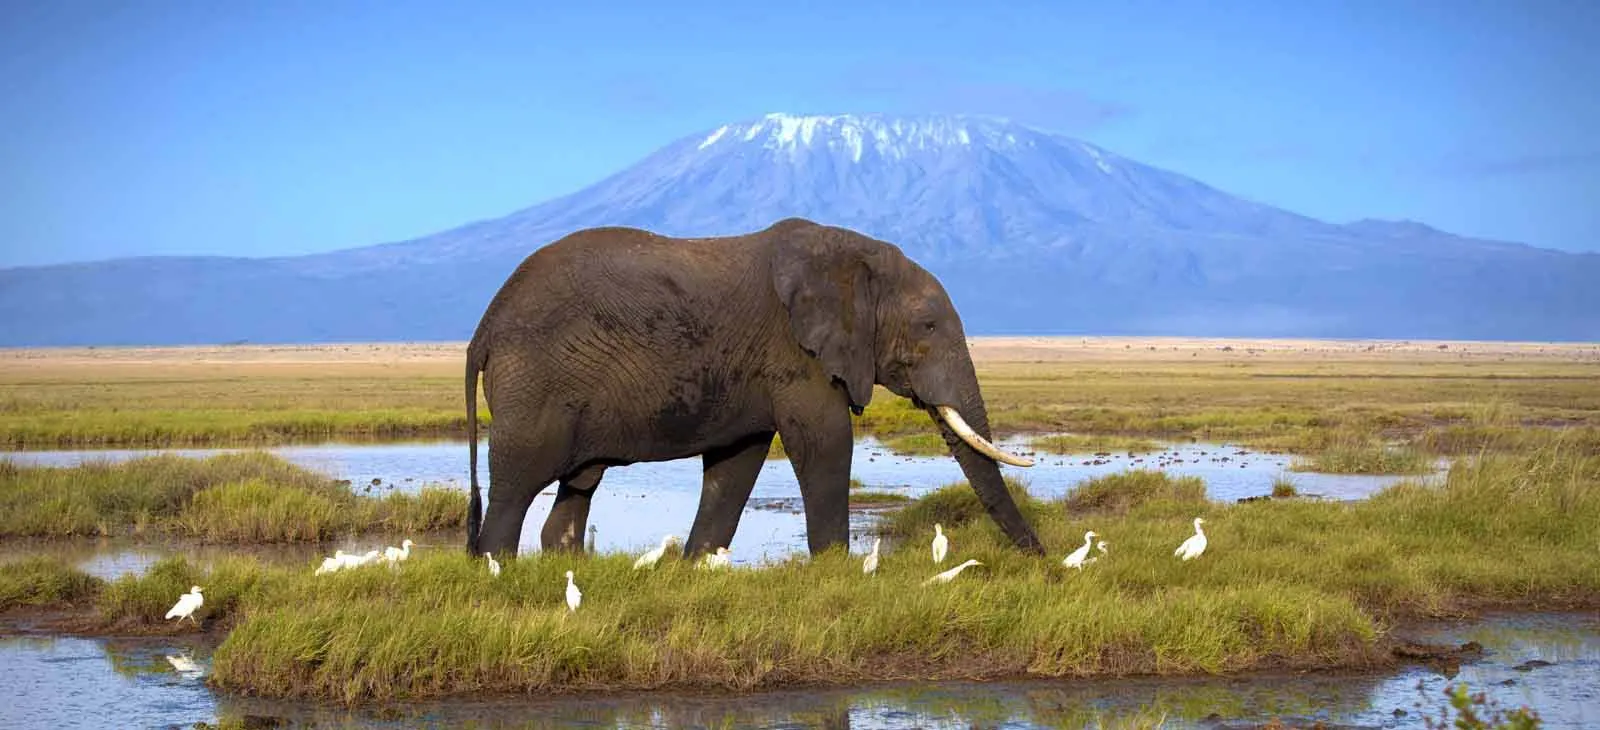 kenya safari tour- elephant